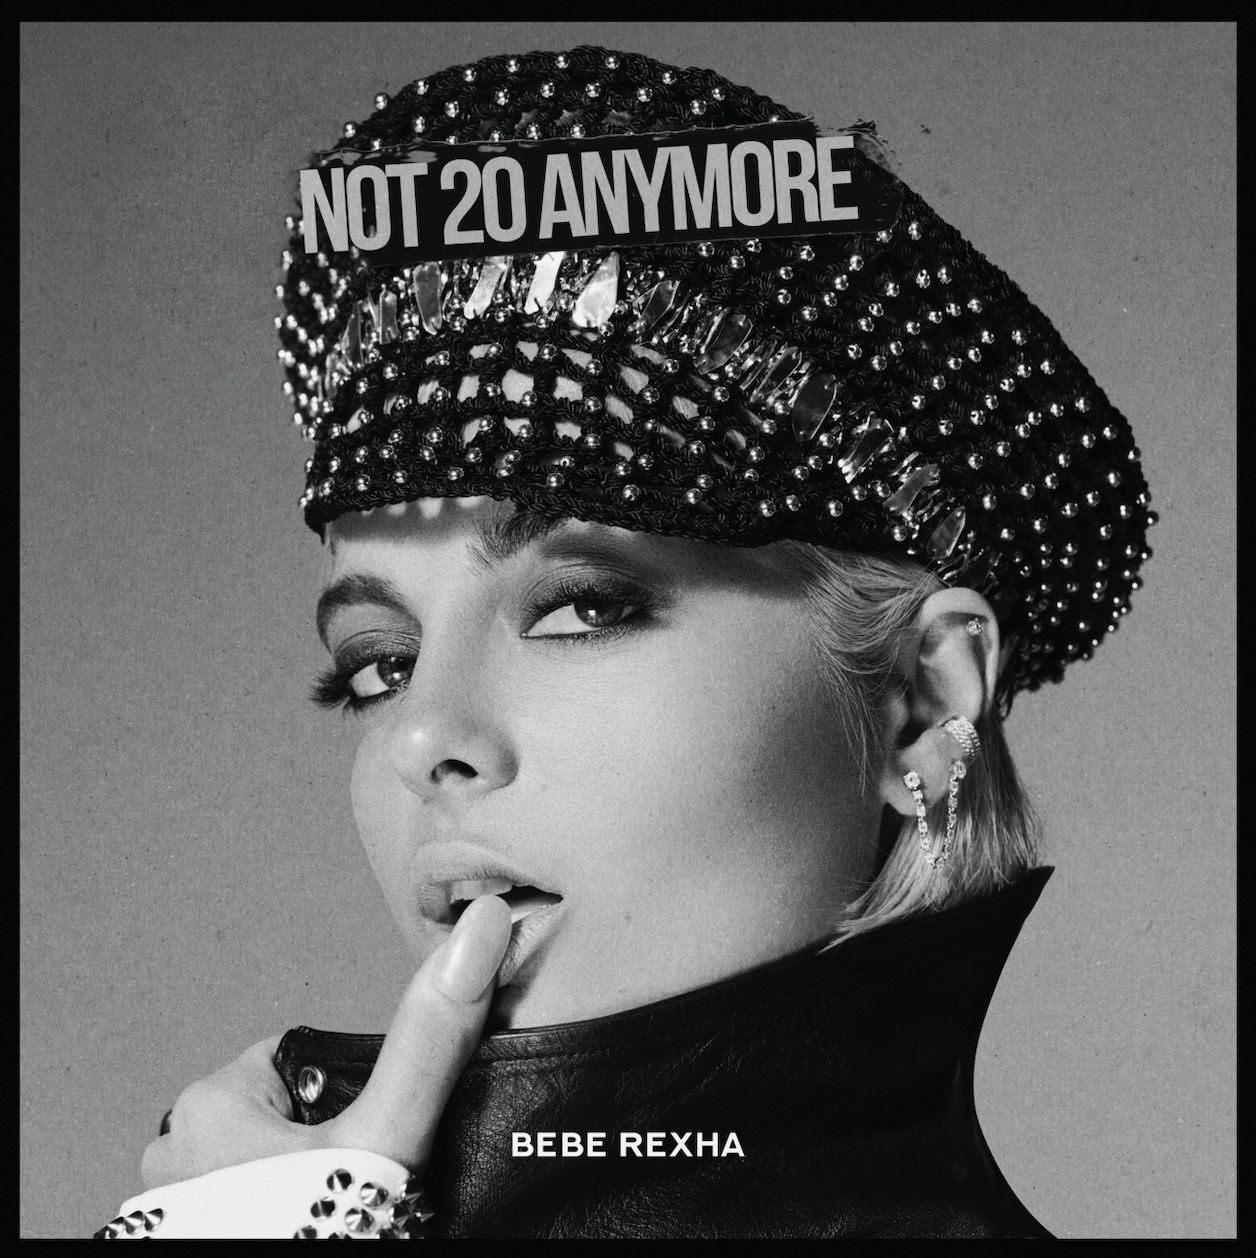 Bebe Rexha celebrates her birthday with “Not 20 Anymore”